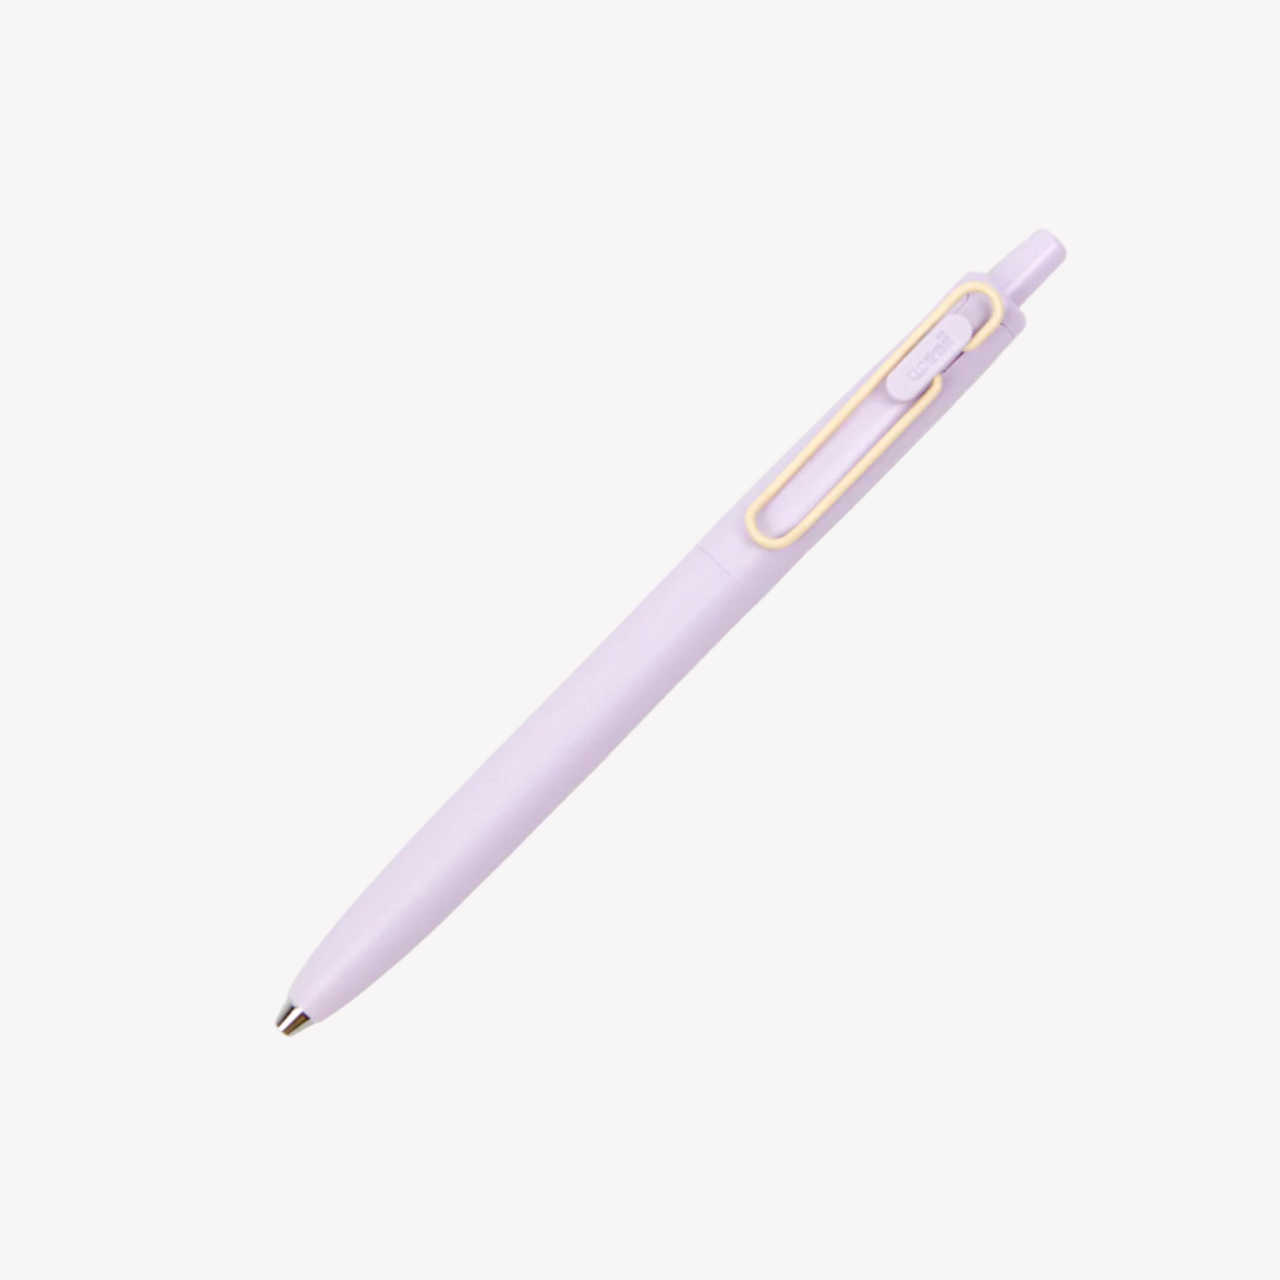 Uni-ball One F Premium Gel Pen (0.38/0.5mm) — Stickerrific